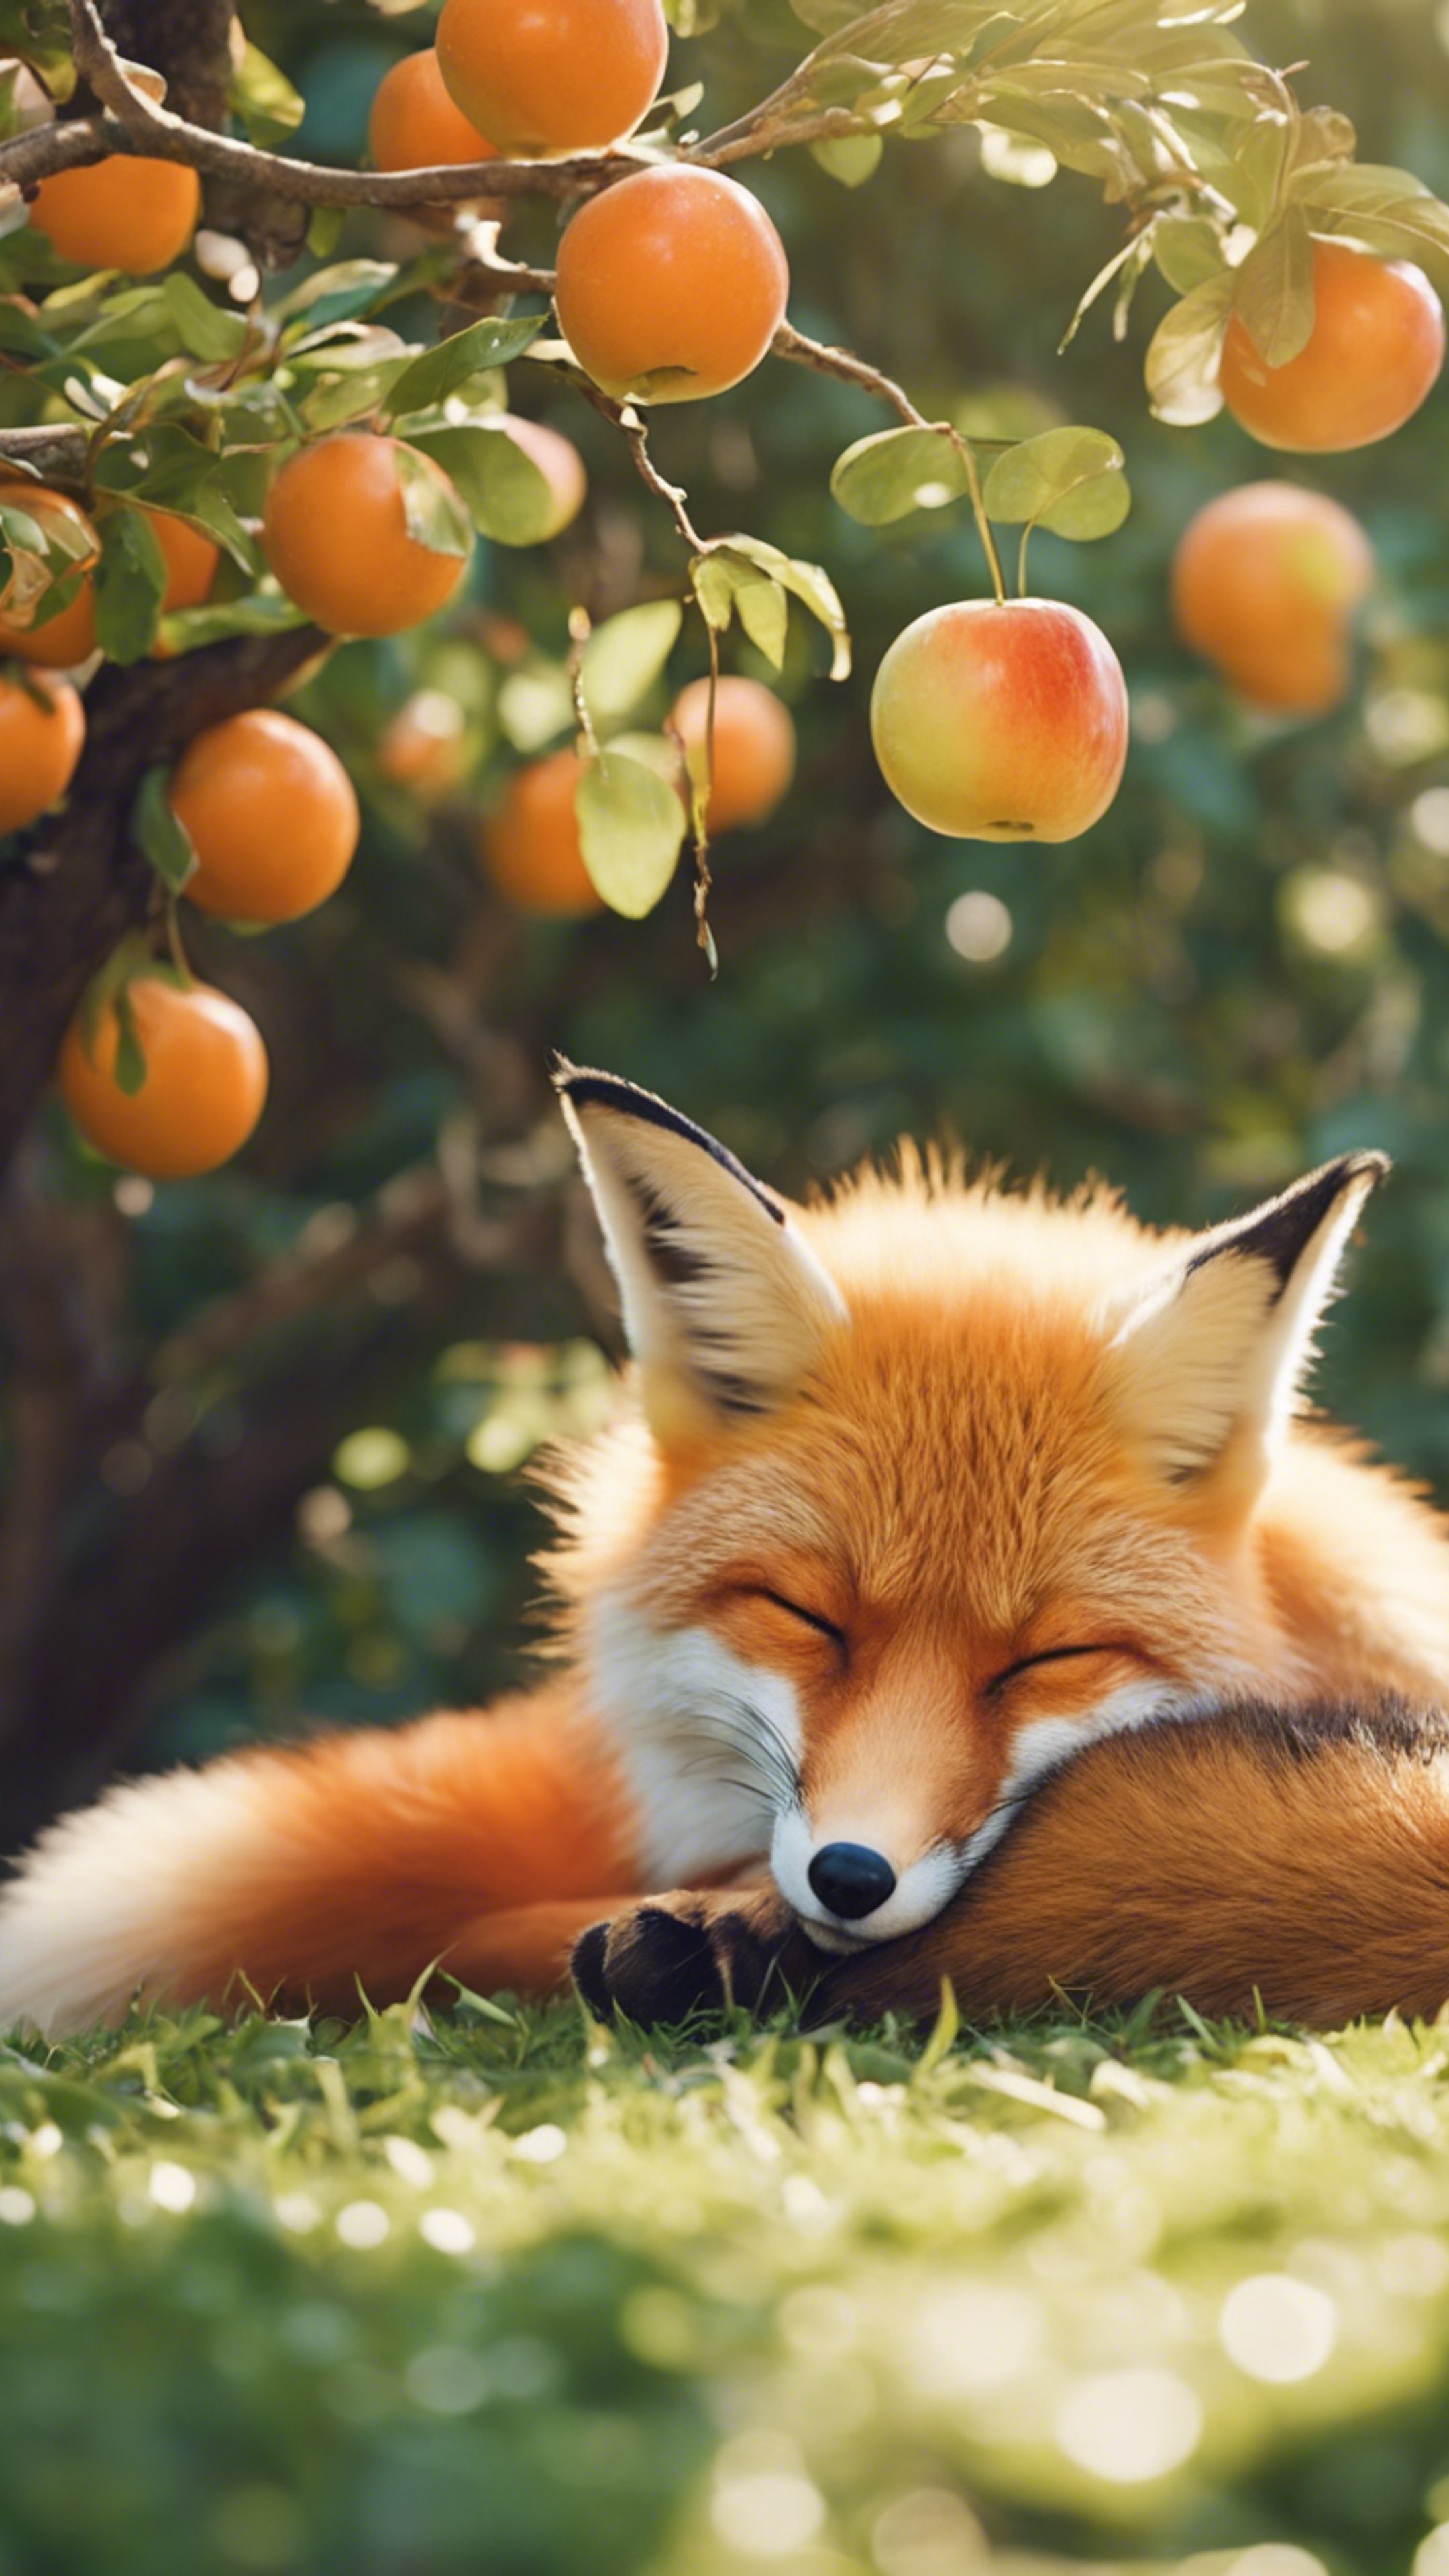 A cute orange kawaii fox sleeping beneath an apple tree. Wallpaper[ef9675b83cb04befb3c9]